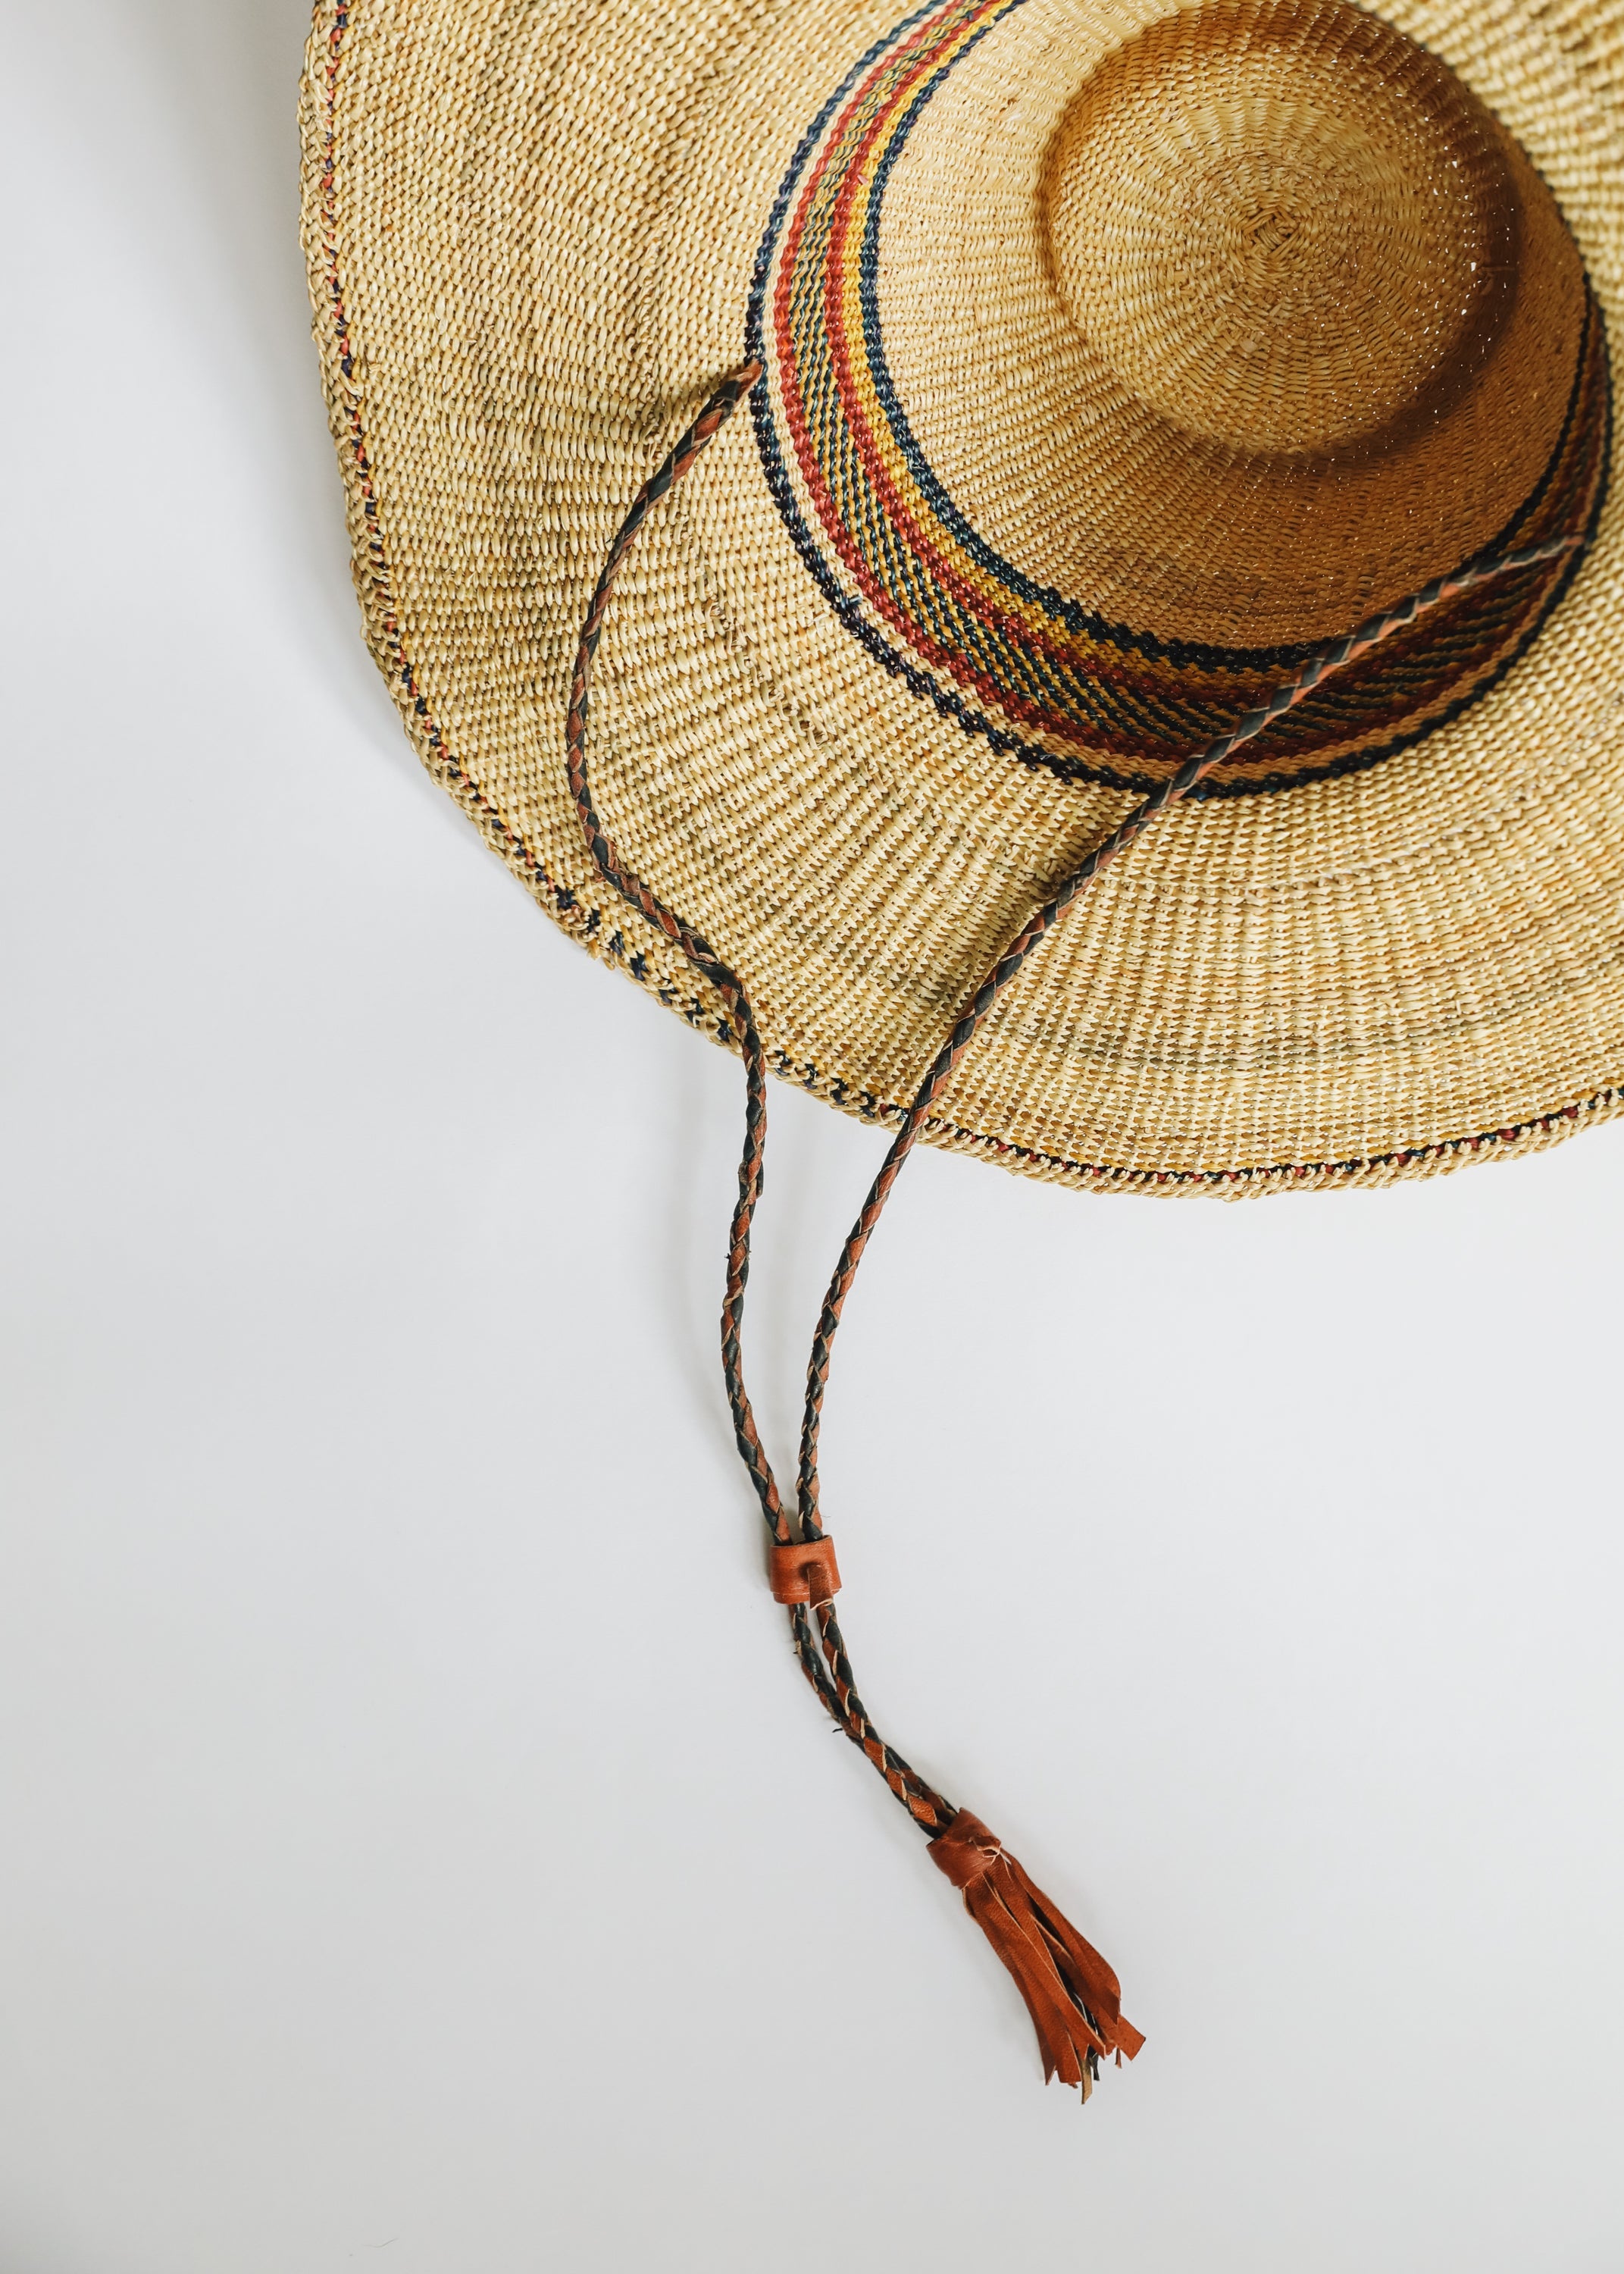 Woven Sun Hat • Restock on Earth Day 🌱 04.22.24